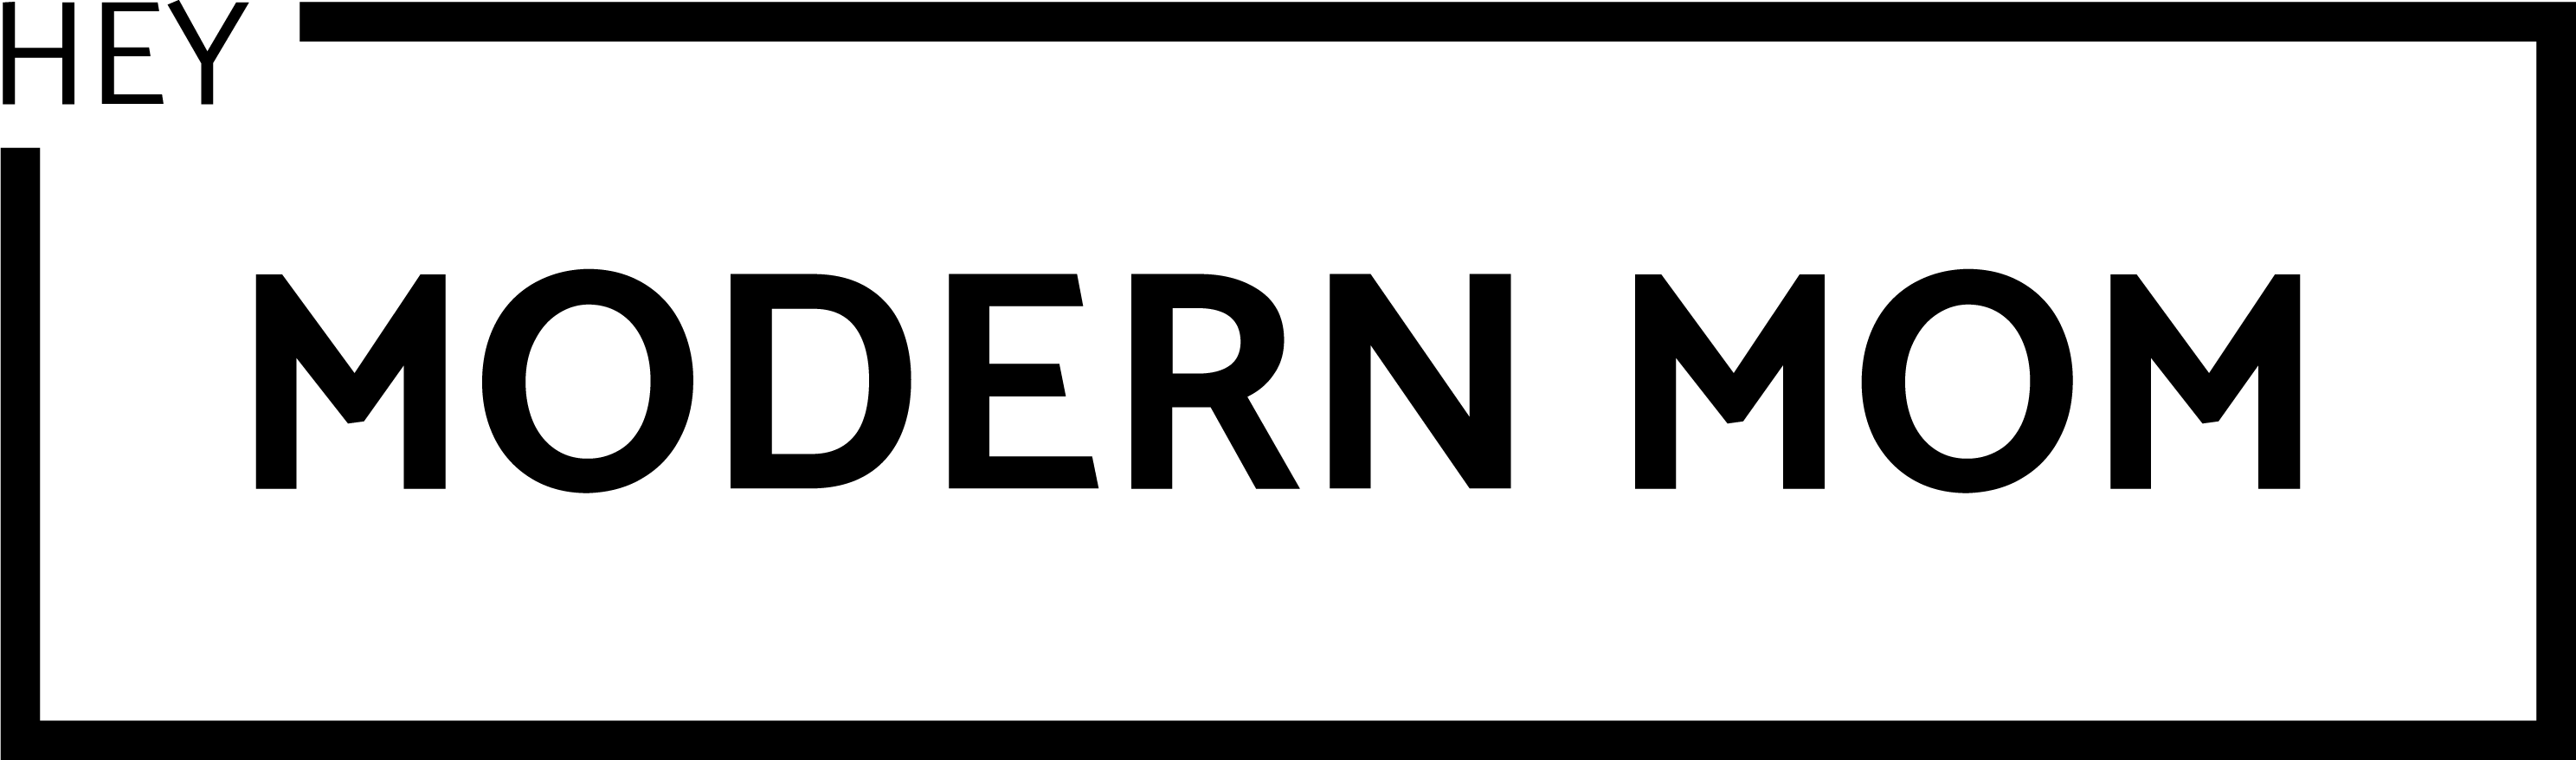 https://heymodernmom.com/static/modernmom/img/hey-modern-mom-logo.png